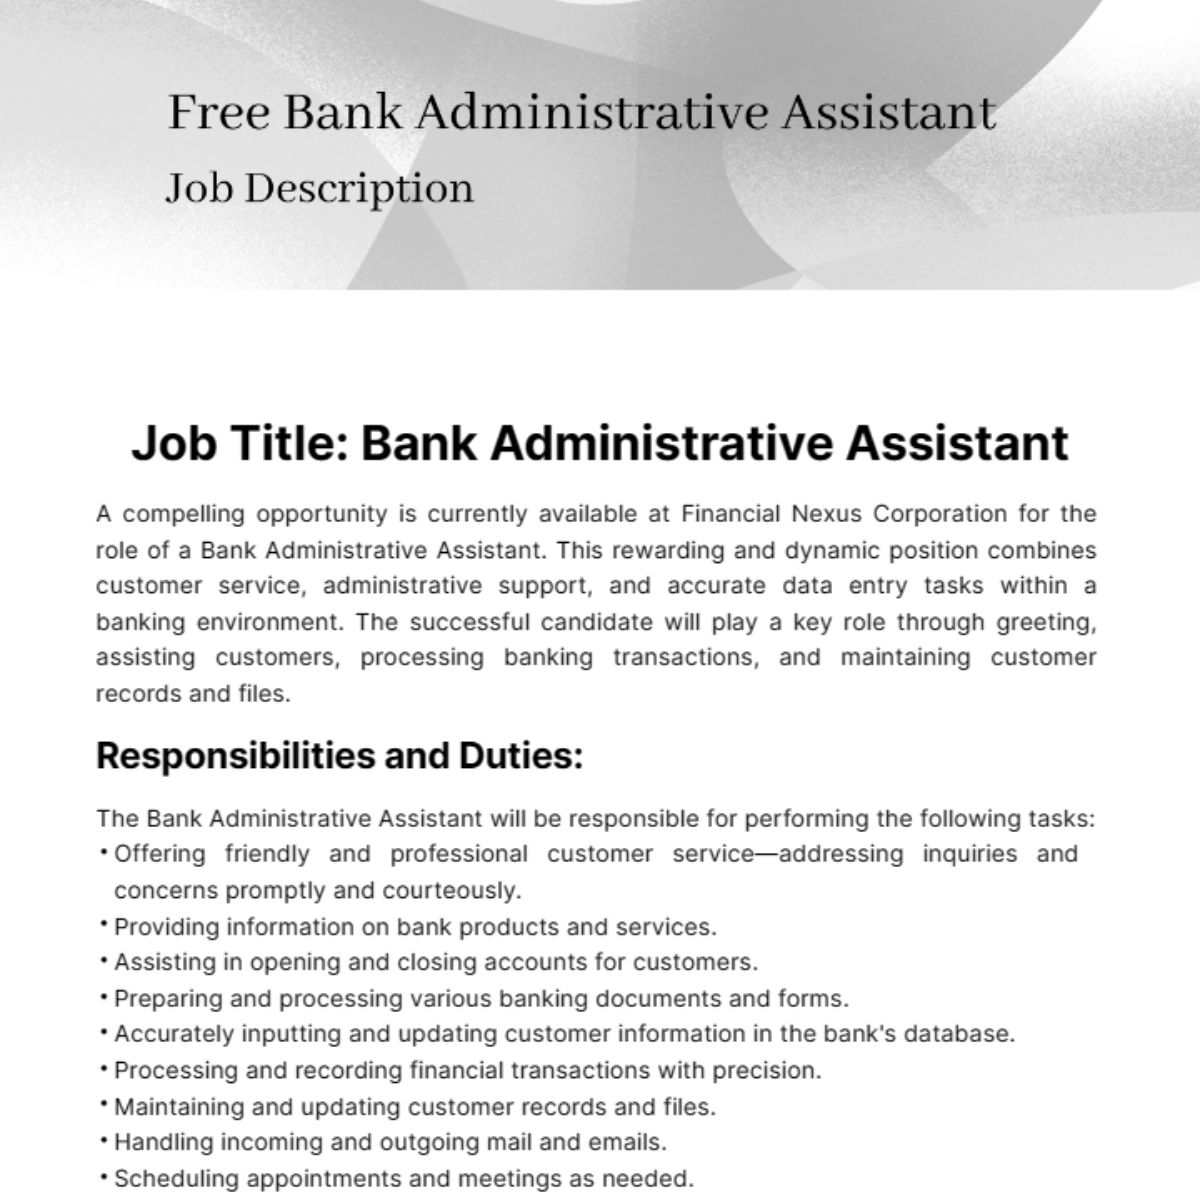 Free Bank Administrative Assistant Job Description Template